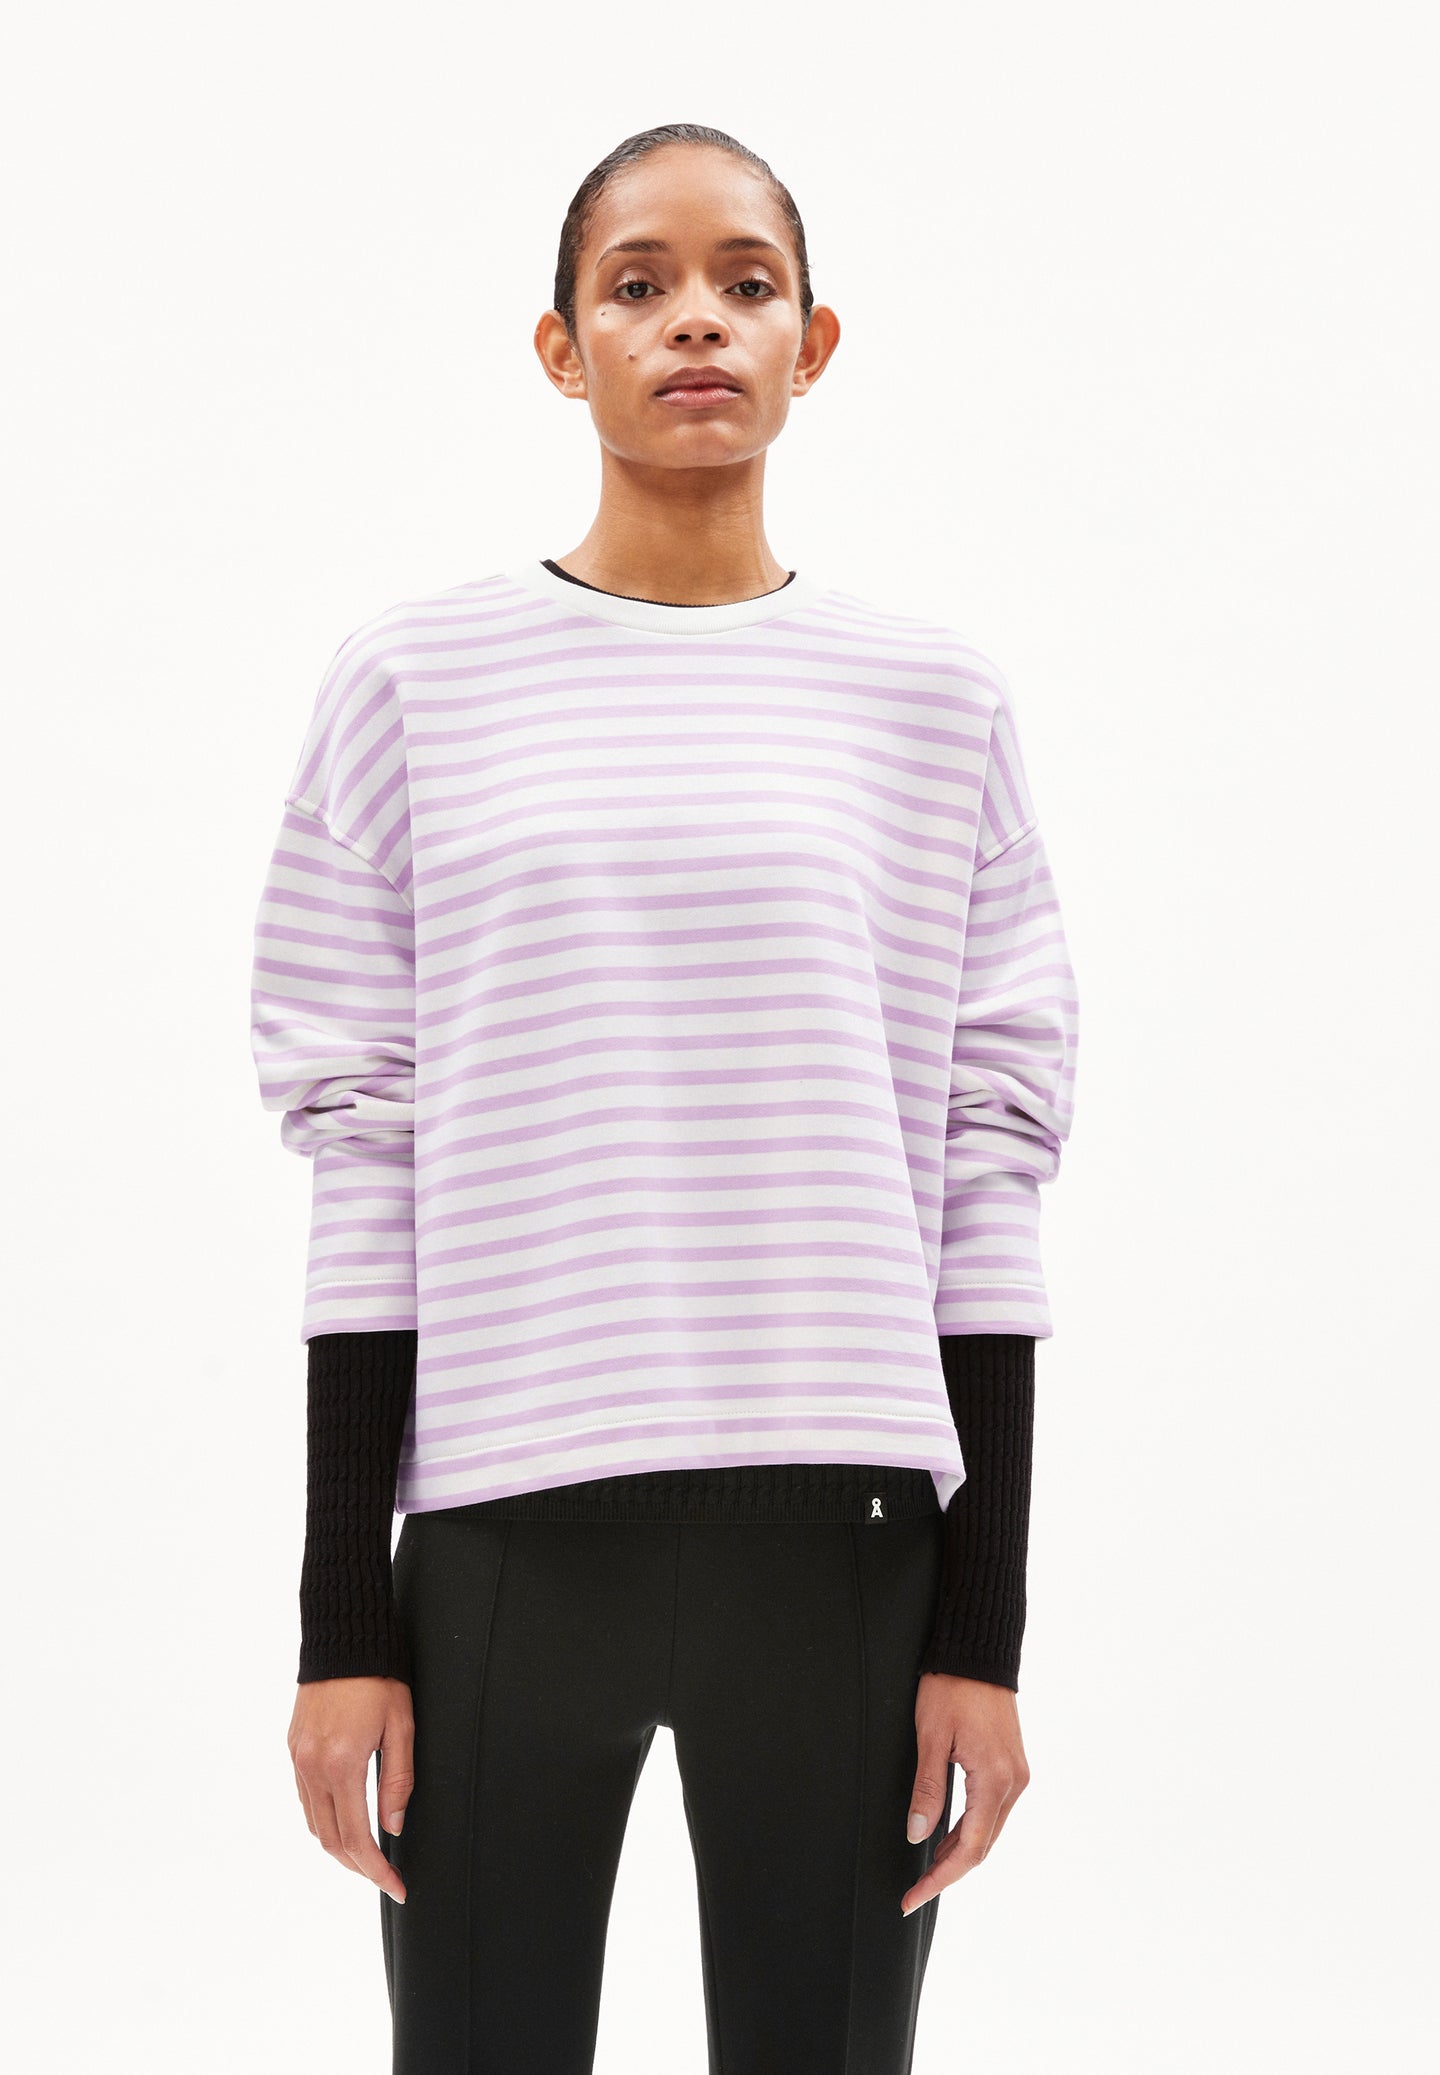 Armedangels FRANKAA MAARLEN Sweatshirt striped lavender light-undyed